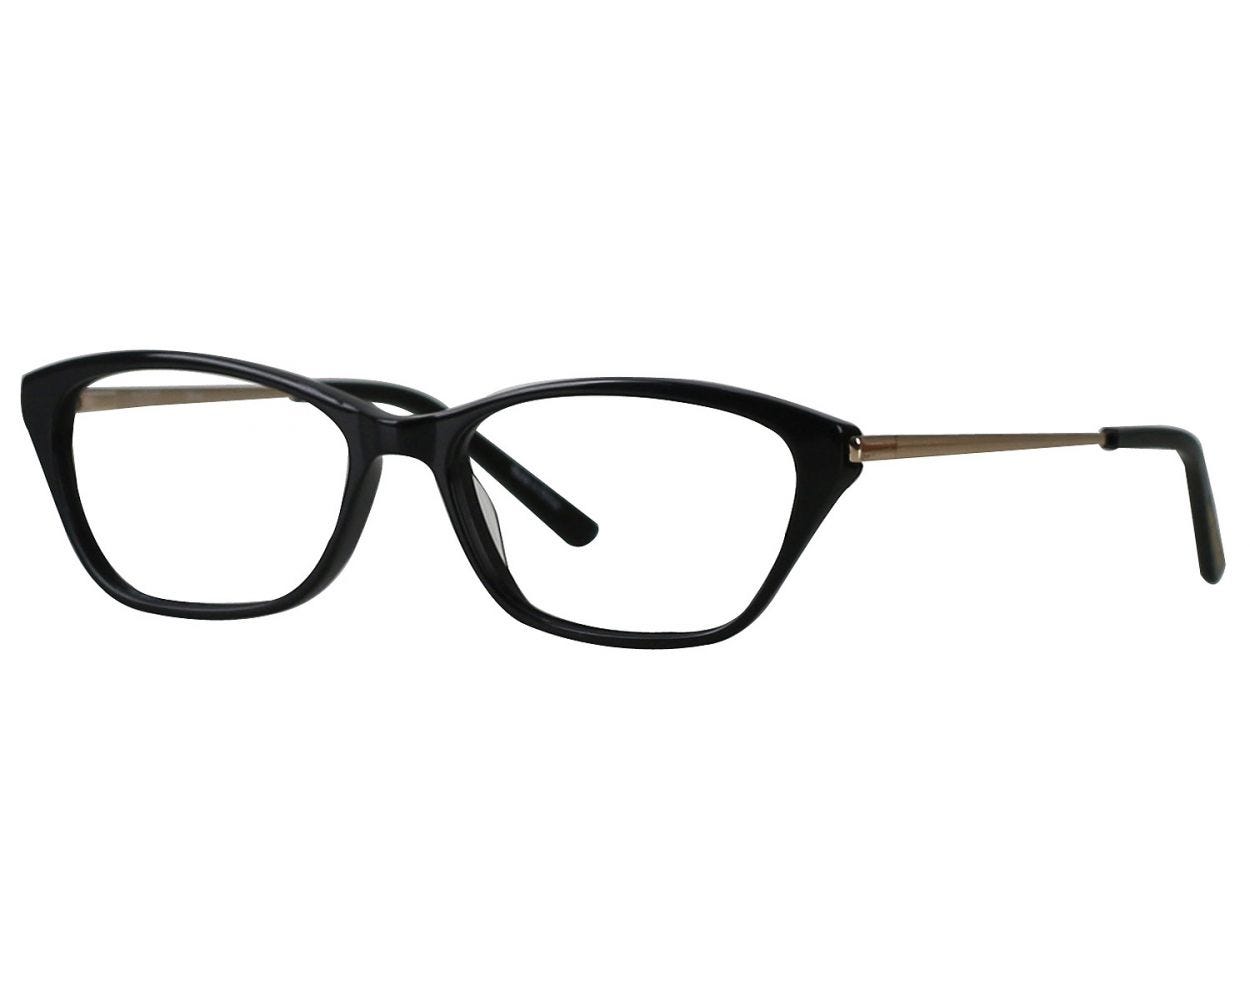 Isaac Mizrahi Eyeglasses 144239-c